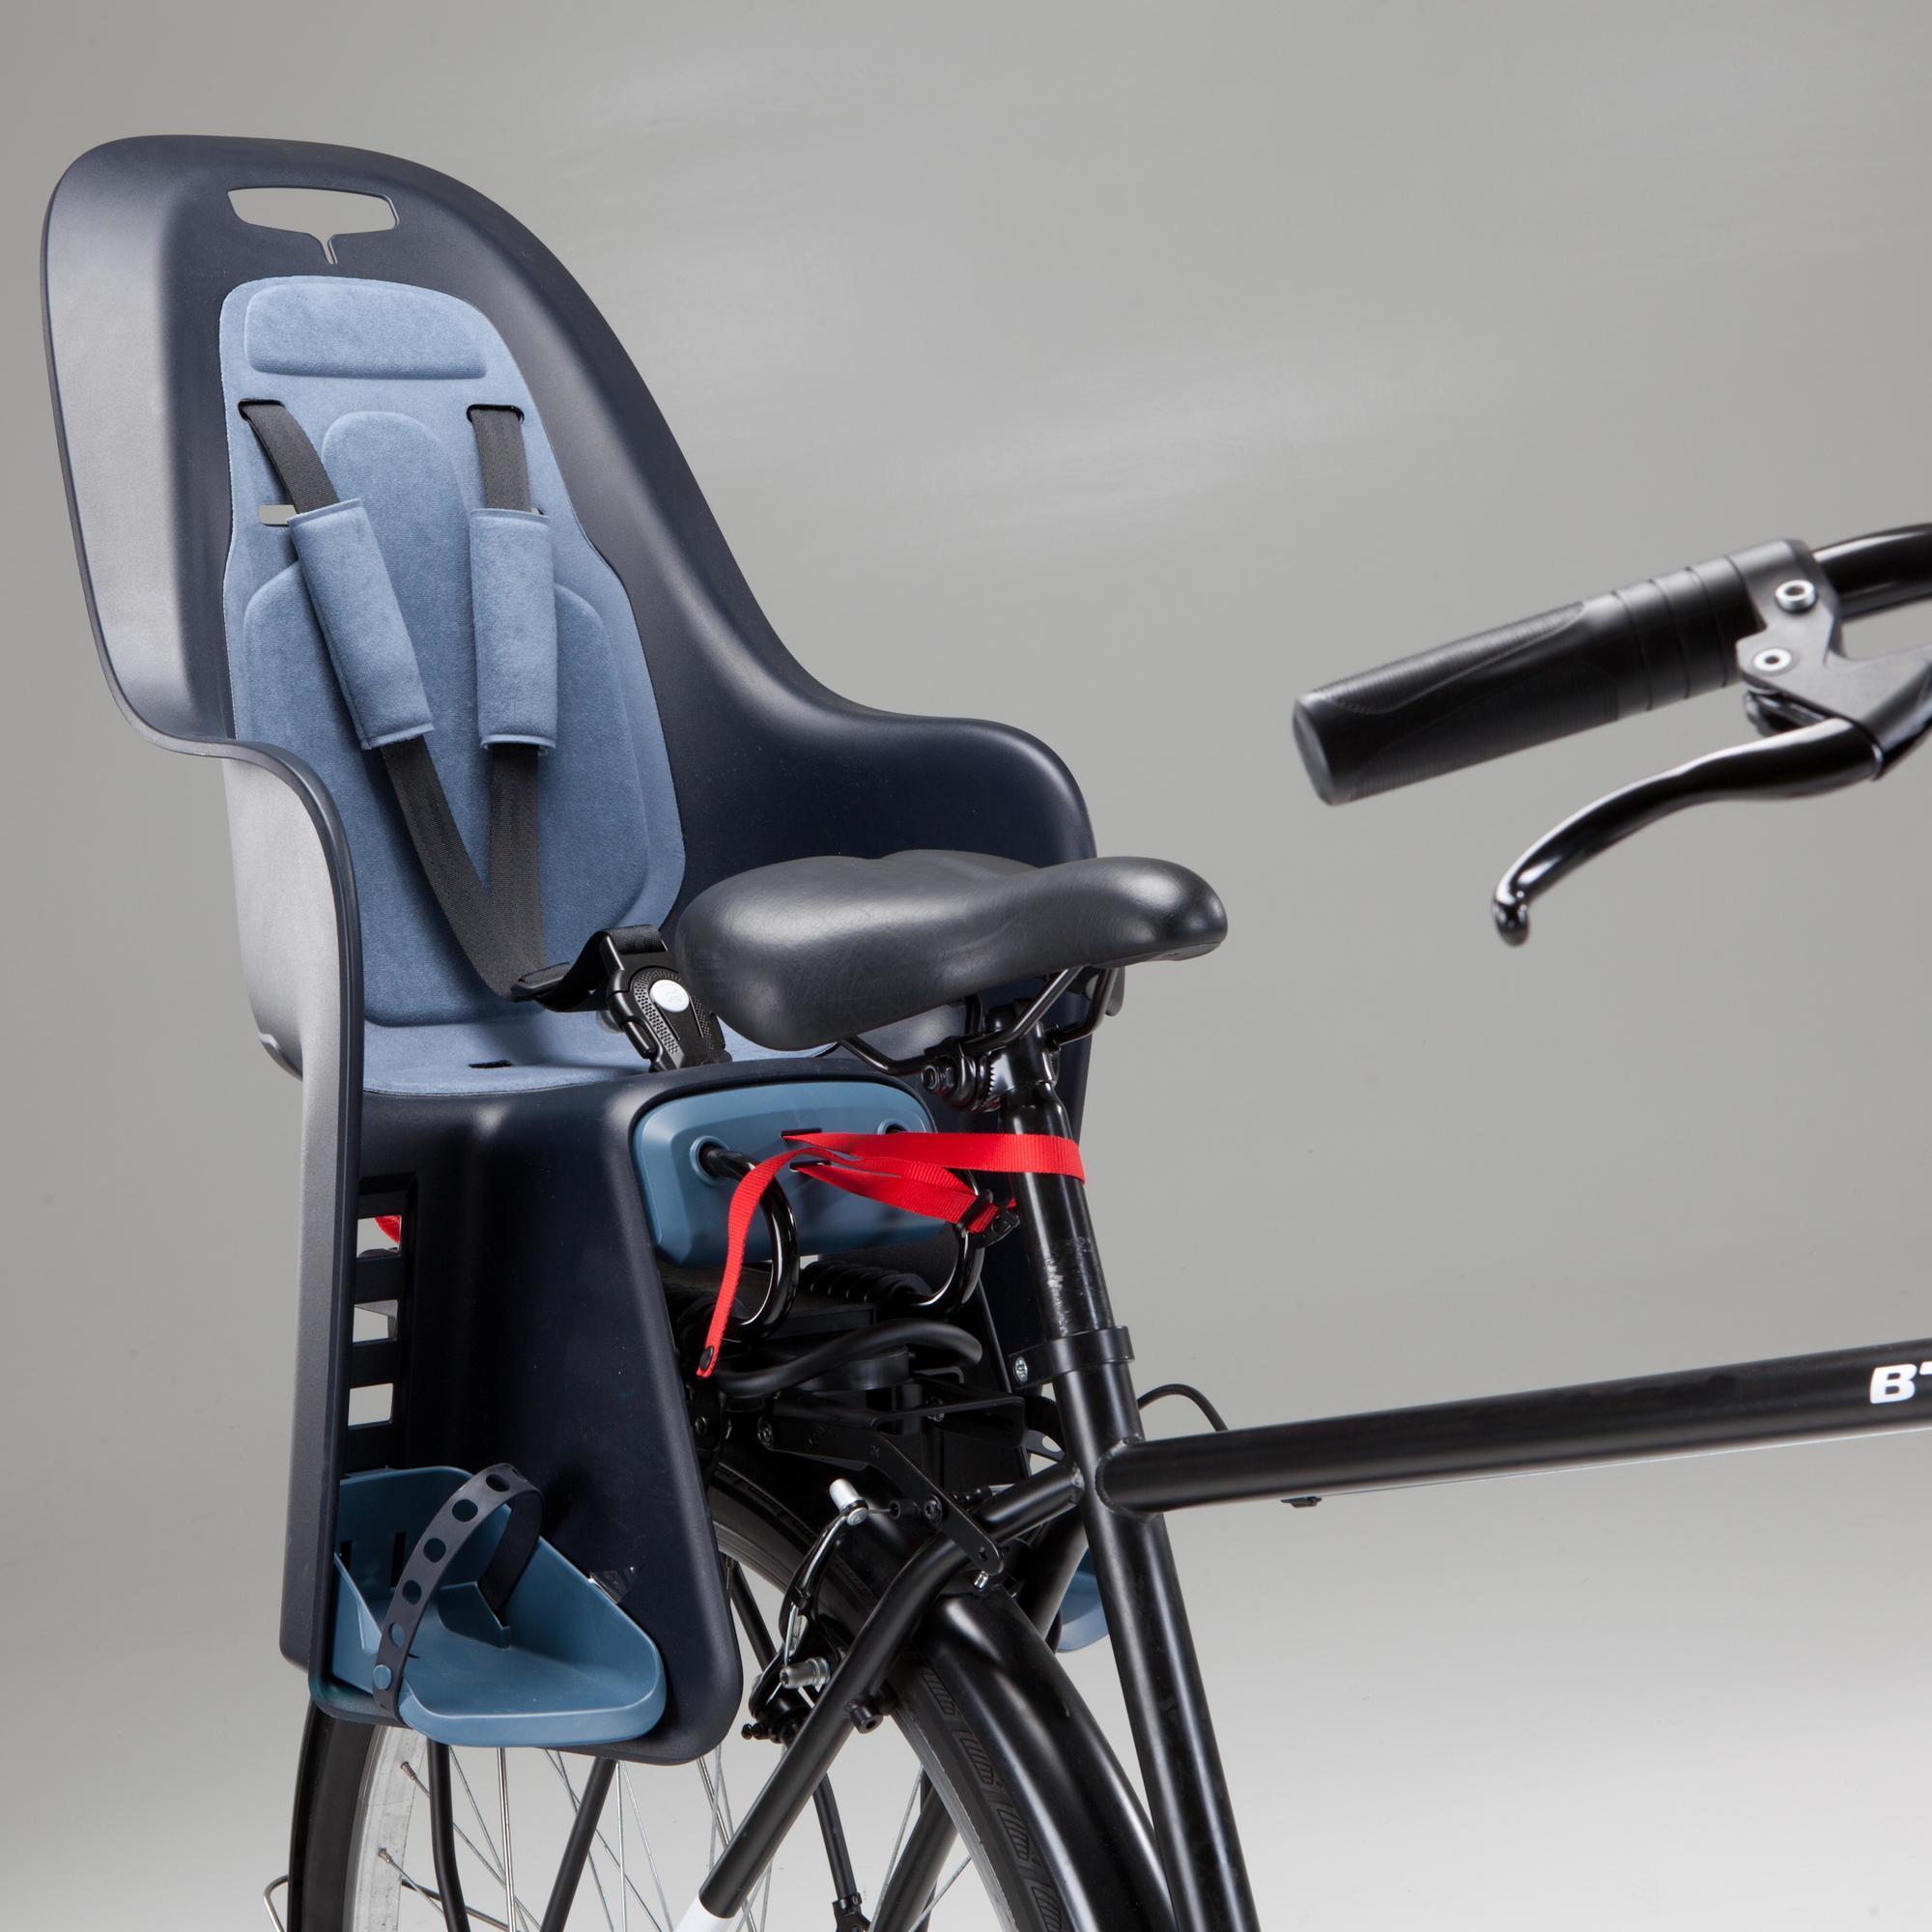 decathlon bicycle baby seat